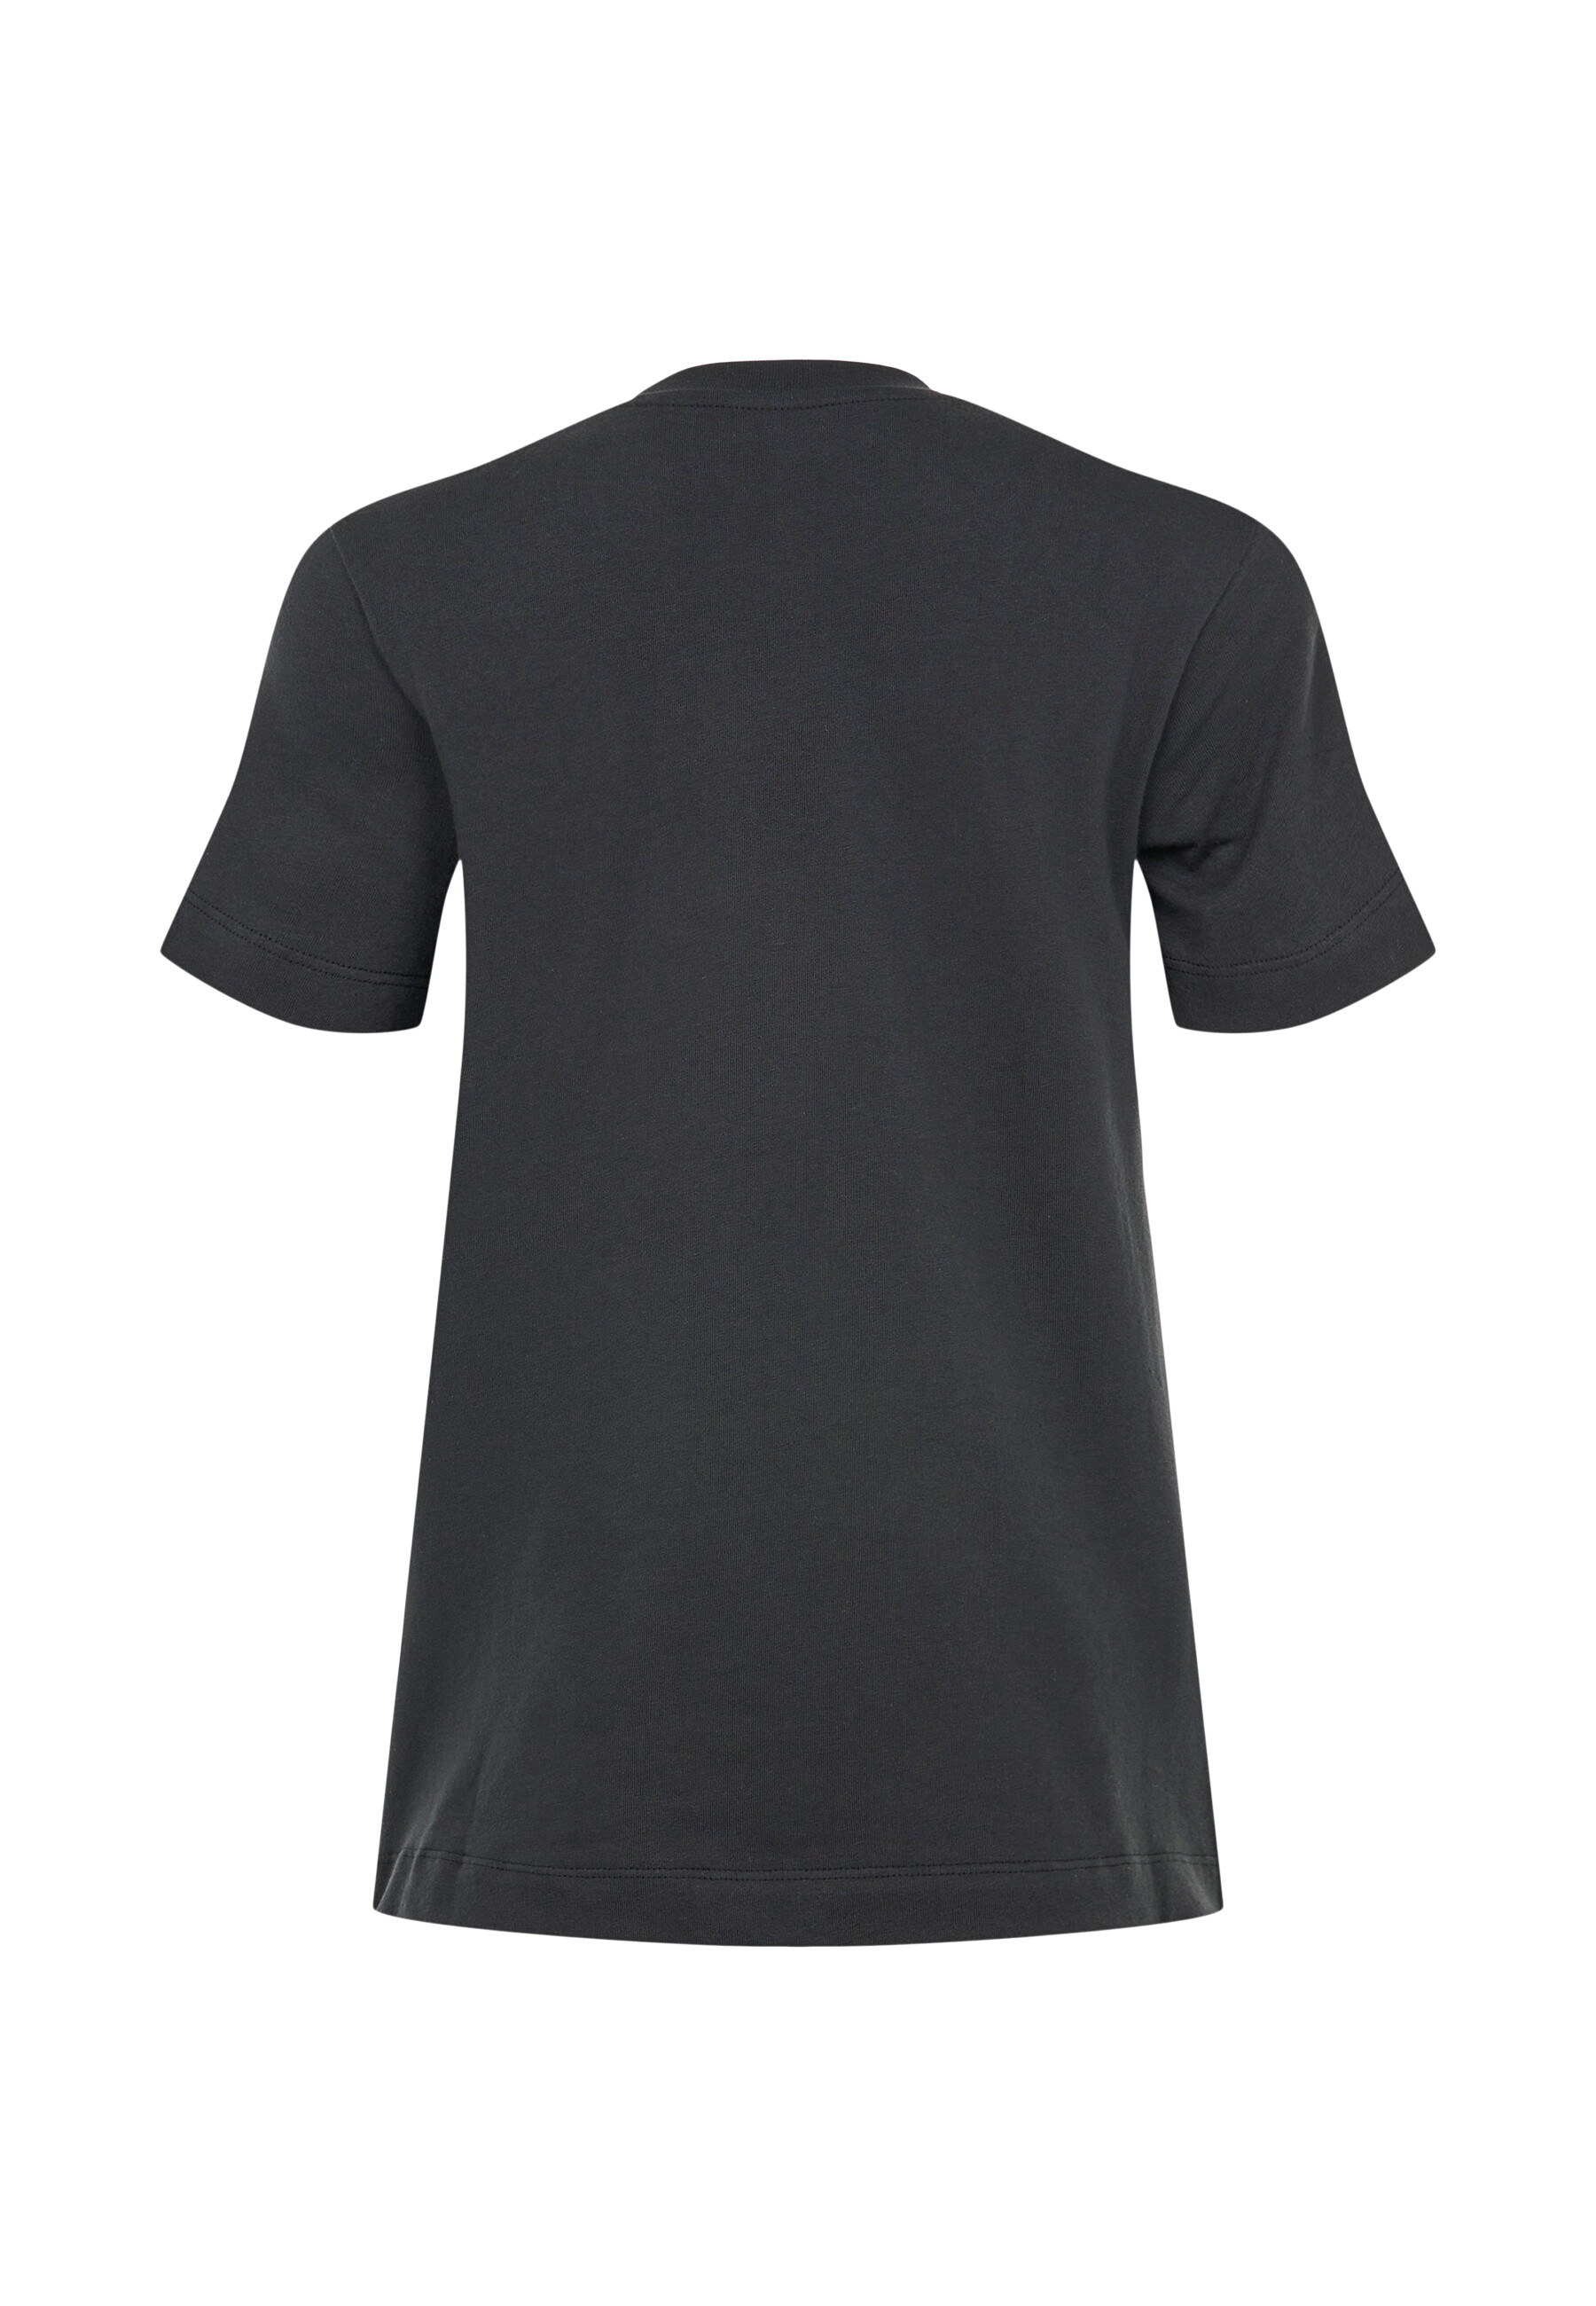 T-Shirt WATERAID front printed Black Jet